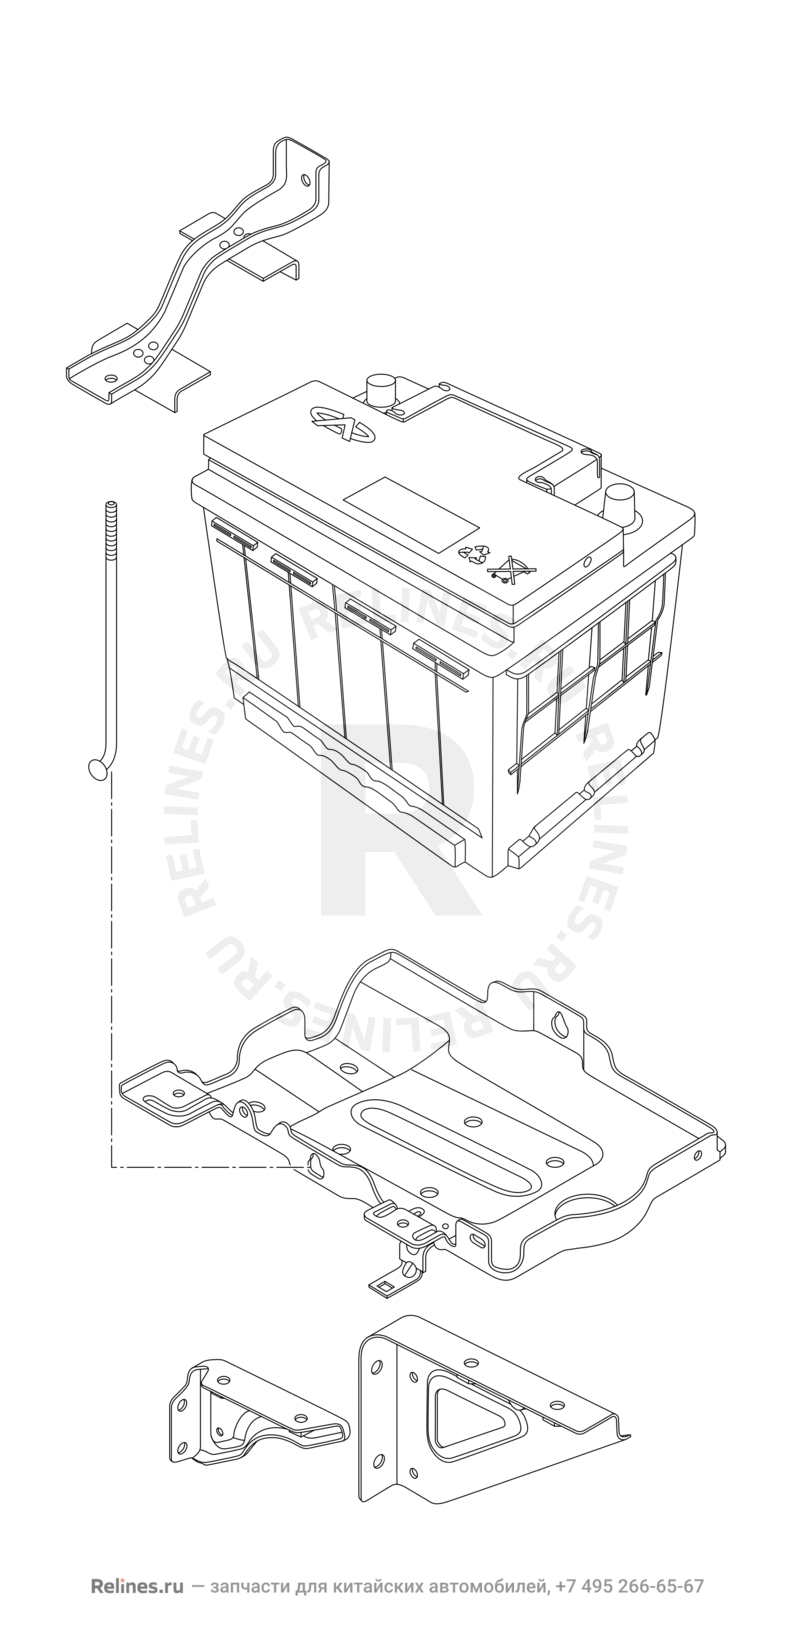 Запчасти Chery Tiggo 5 Поколение I (2013)  — Аккумулятор (1) — схема